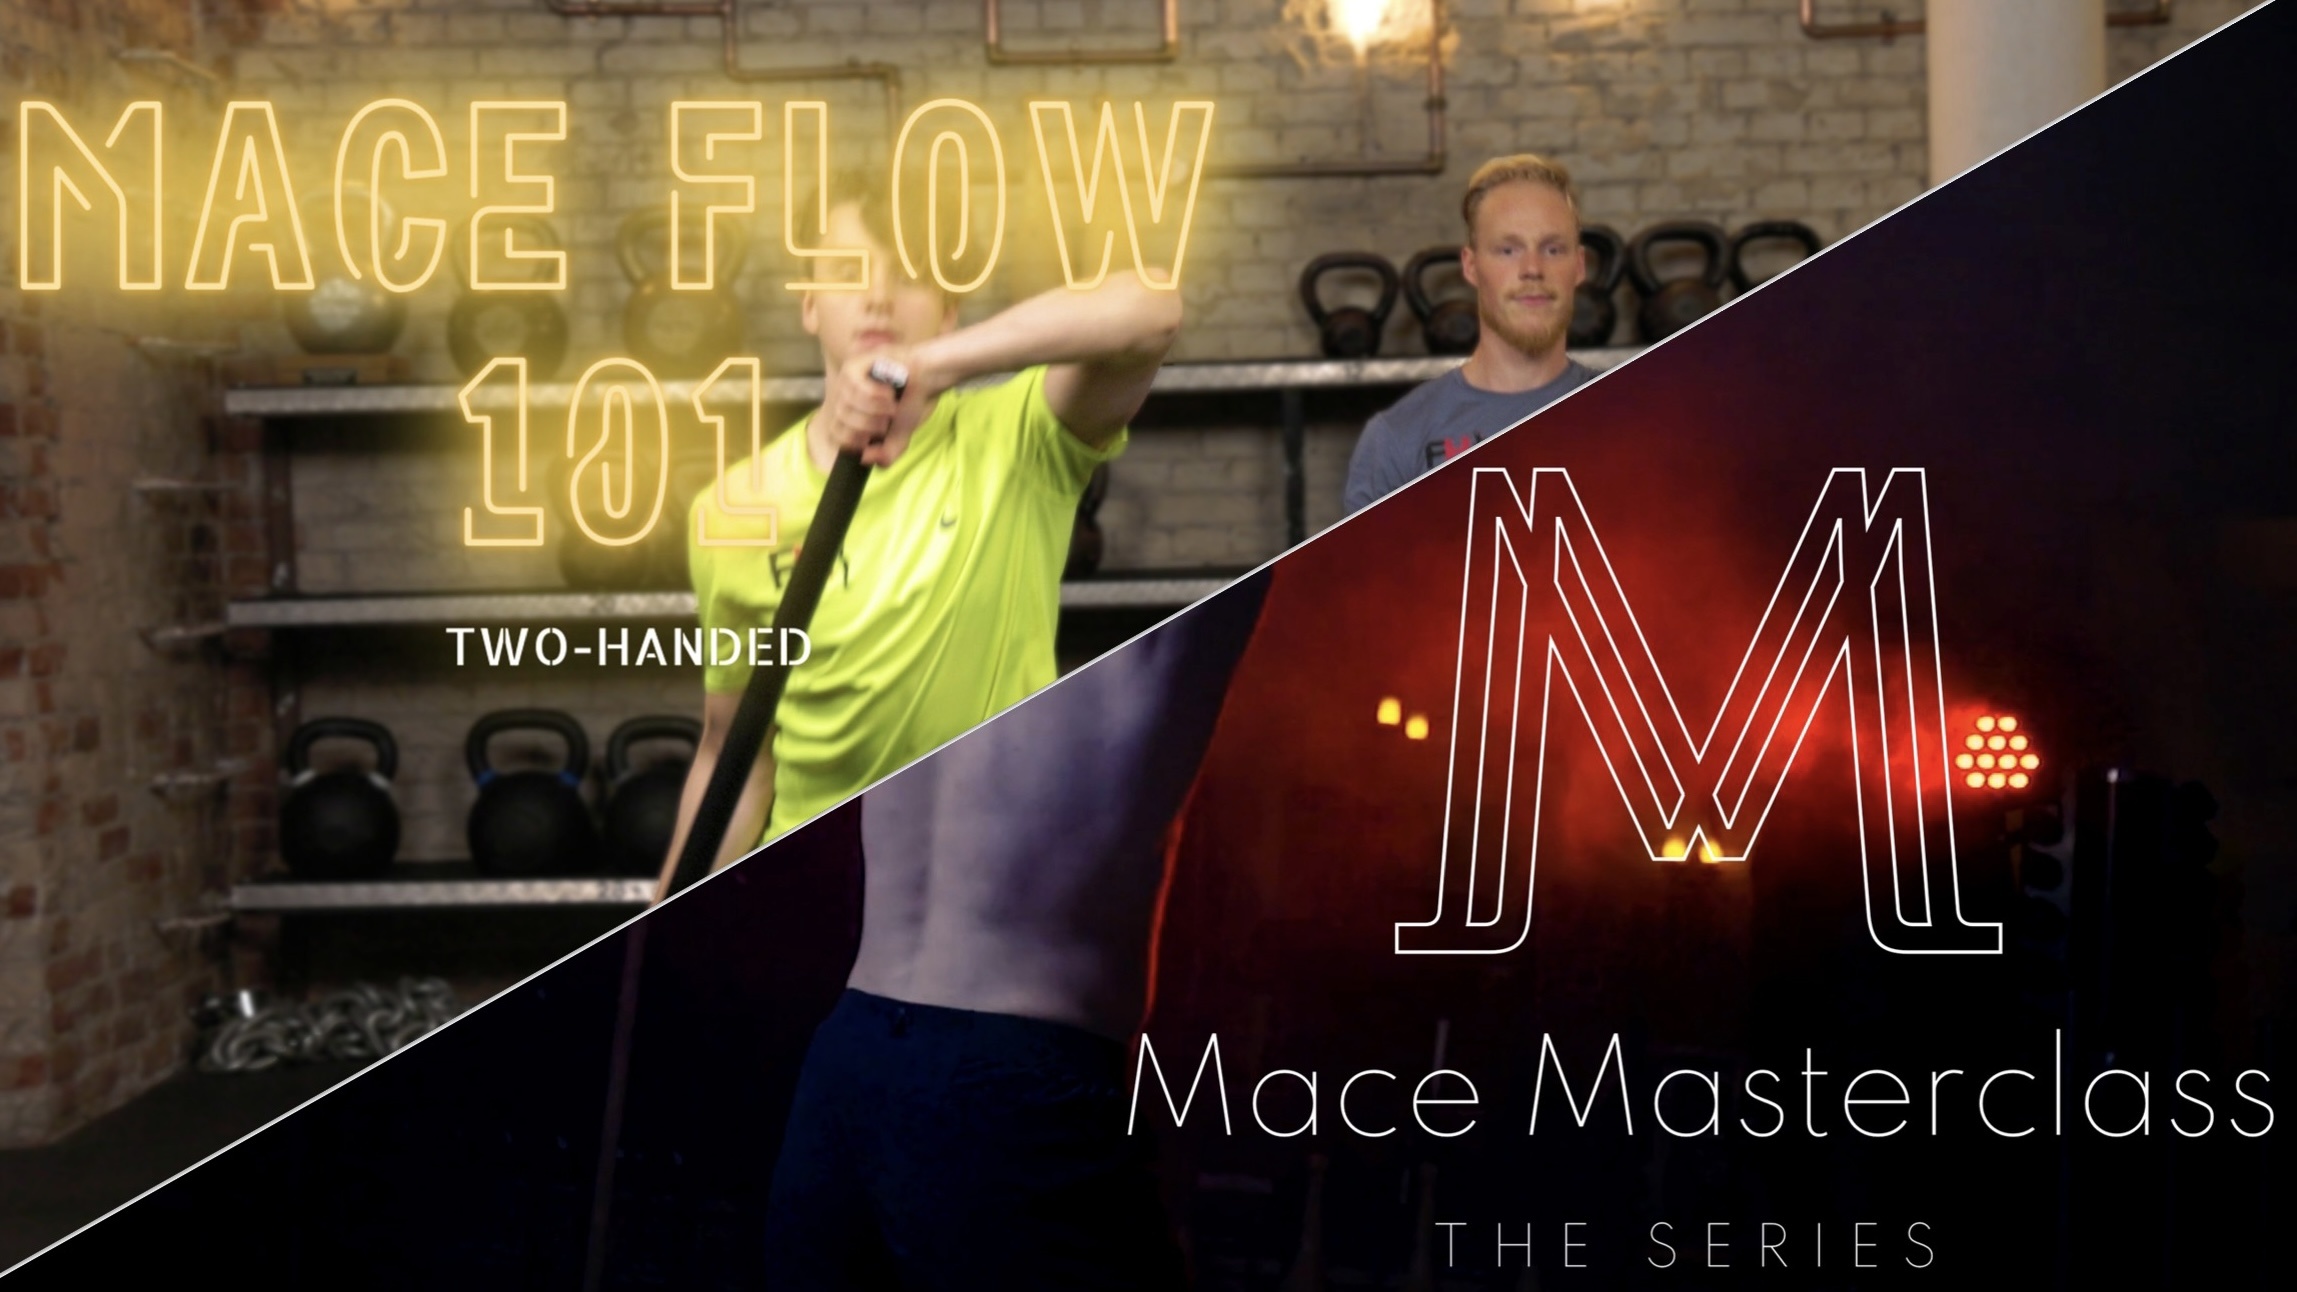 mace masterclass + mace flow 101